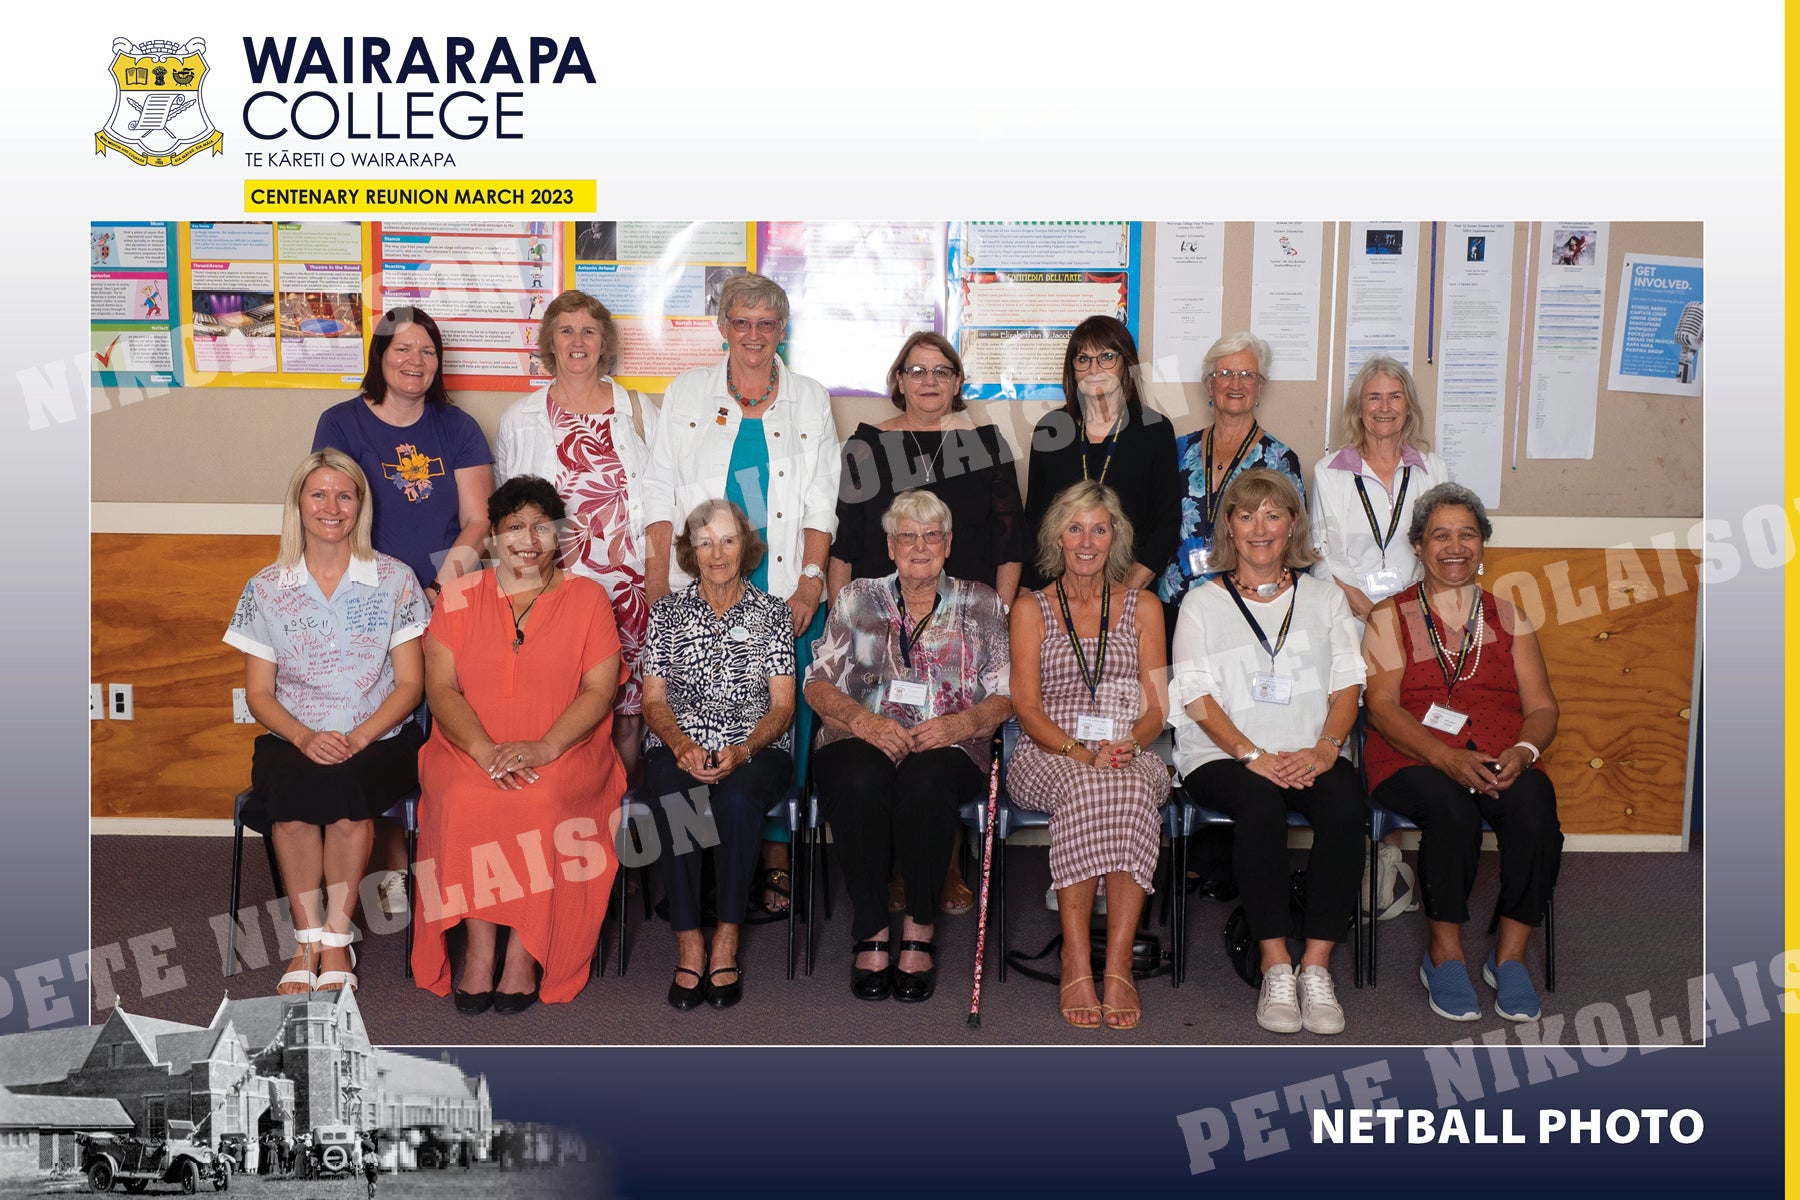 Netball Photo - Wairarapa College Centenary